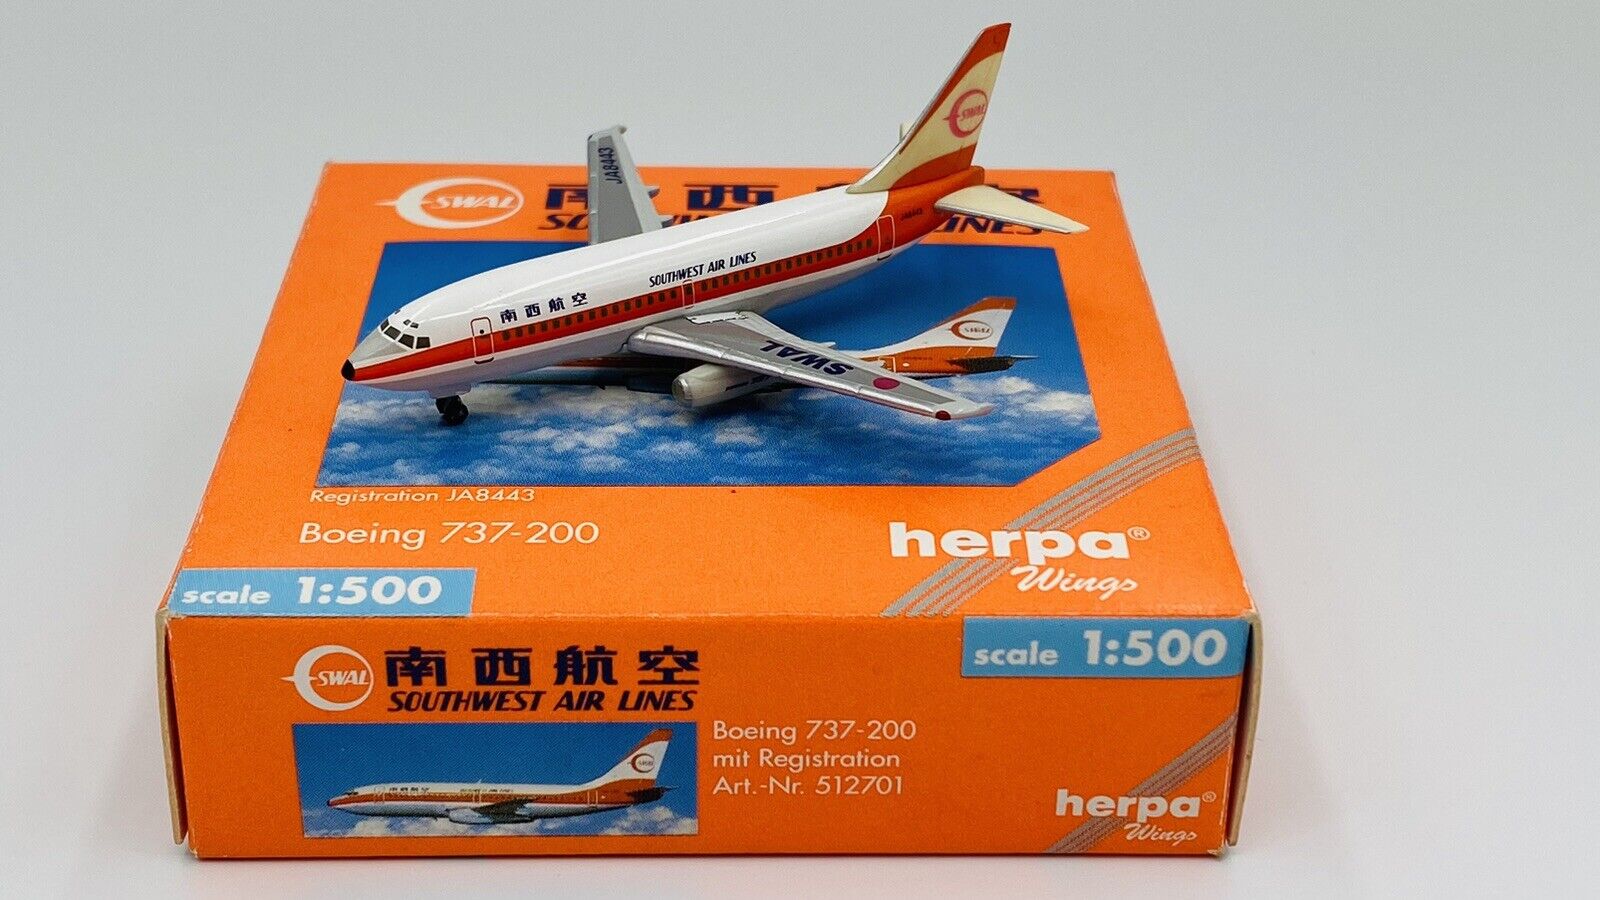 HERPA WINGS (512701) 1:500 SOUTHWEST AIR LINES BOEING 737-200 BOXED